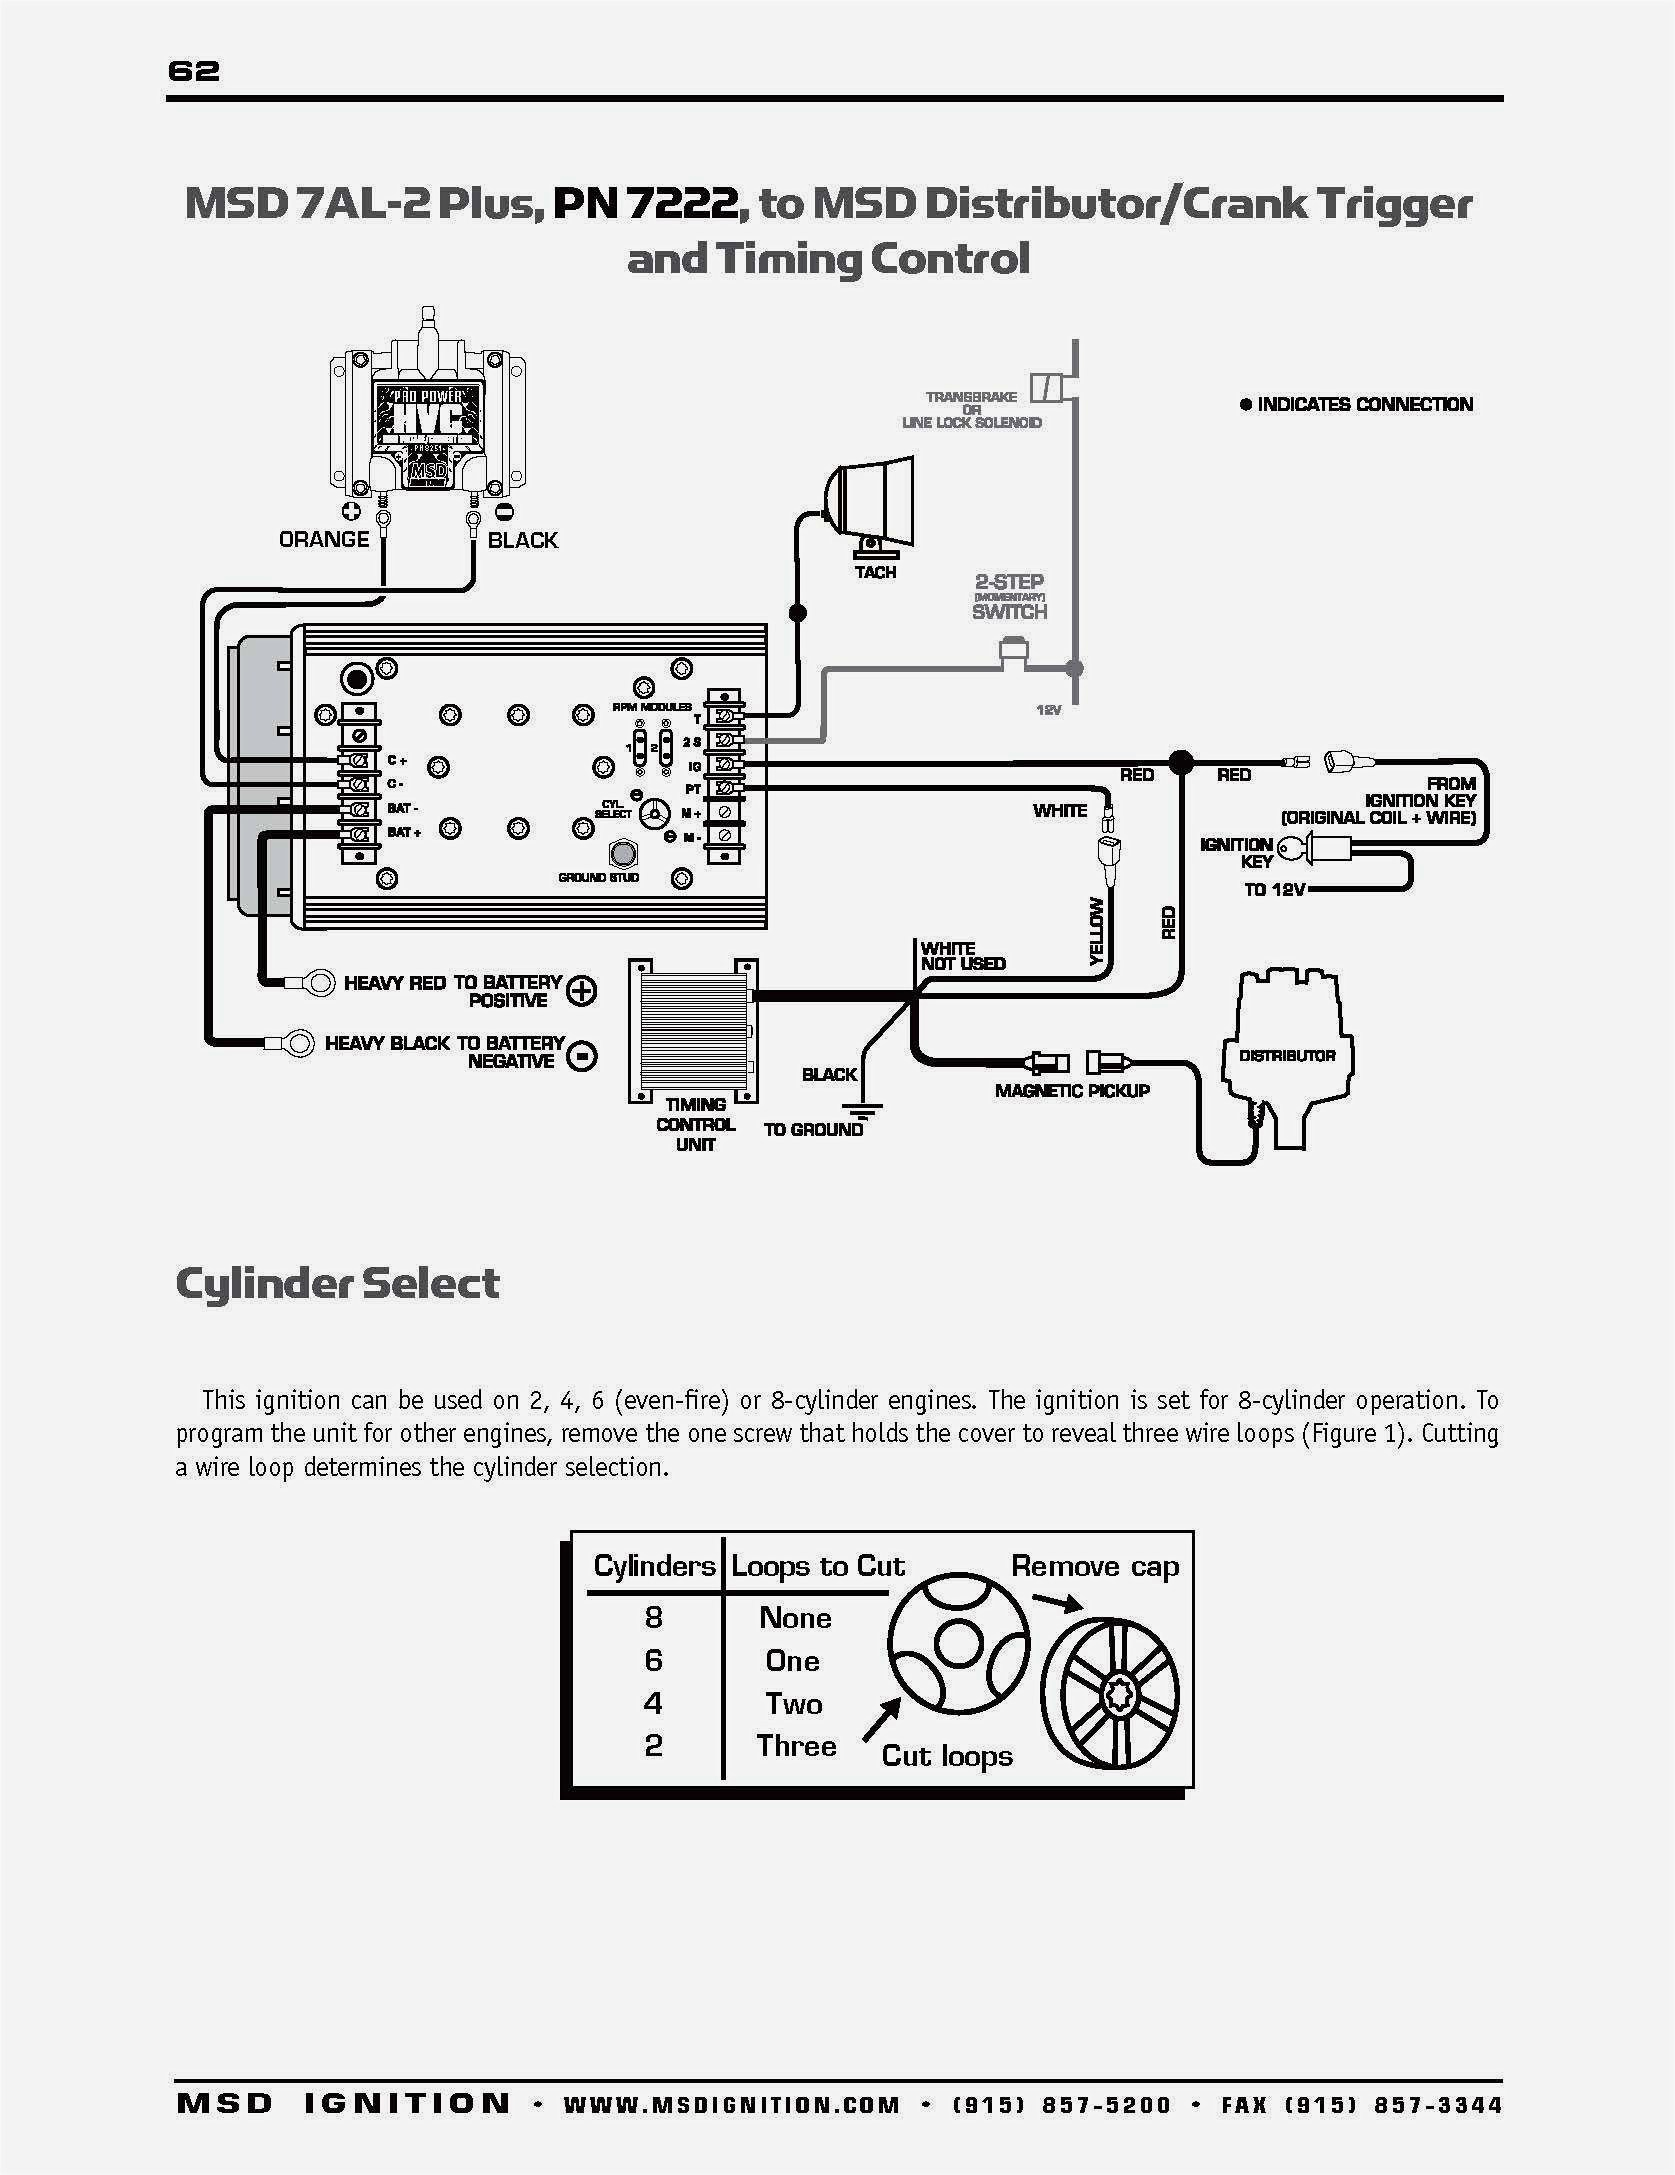 Mallory Magnetic Breakerless Distributor Wiring Diagram | Wiring Diagram - Mallory Magnetic Breakerless Distributor Wiring Diagram